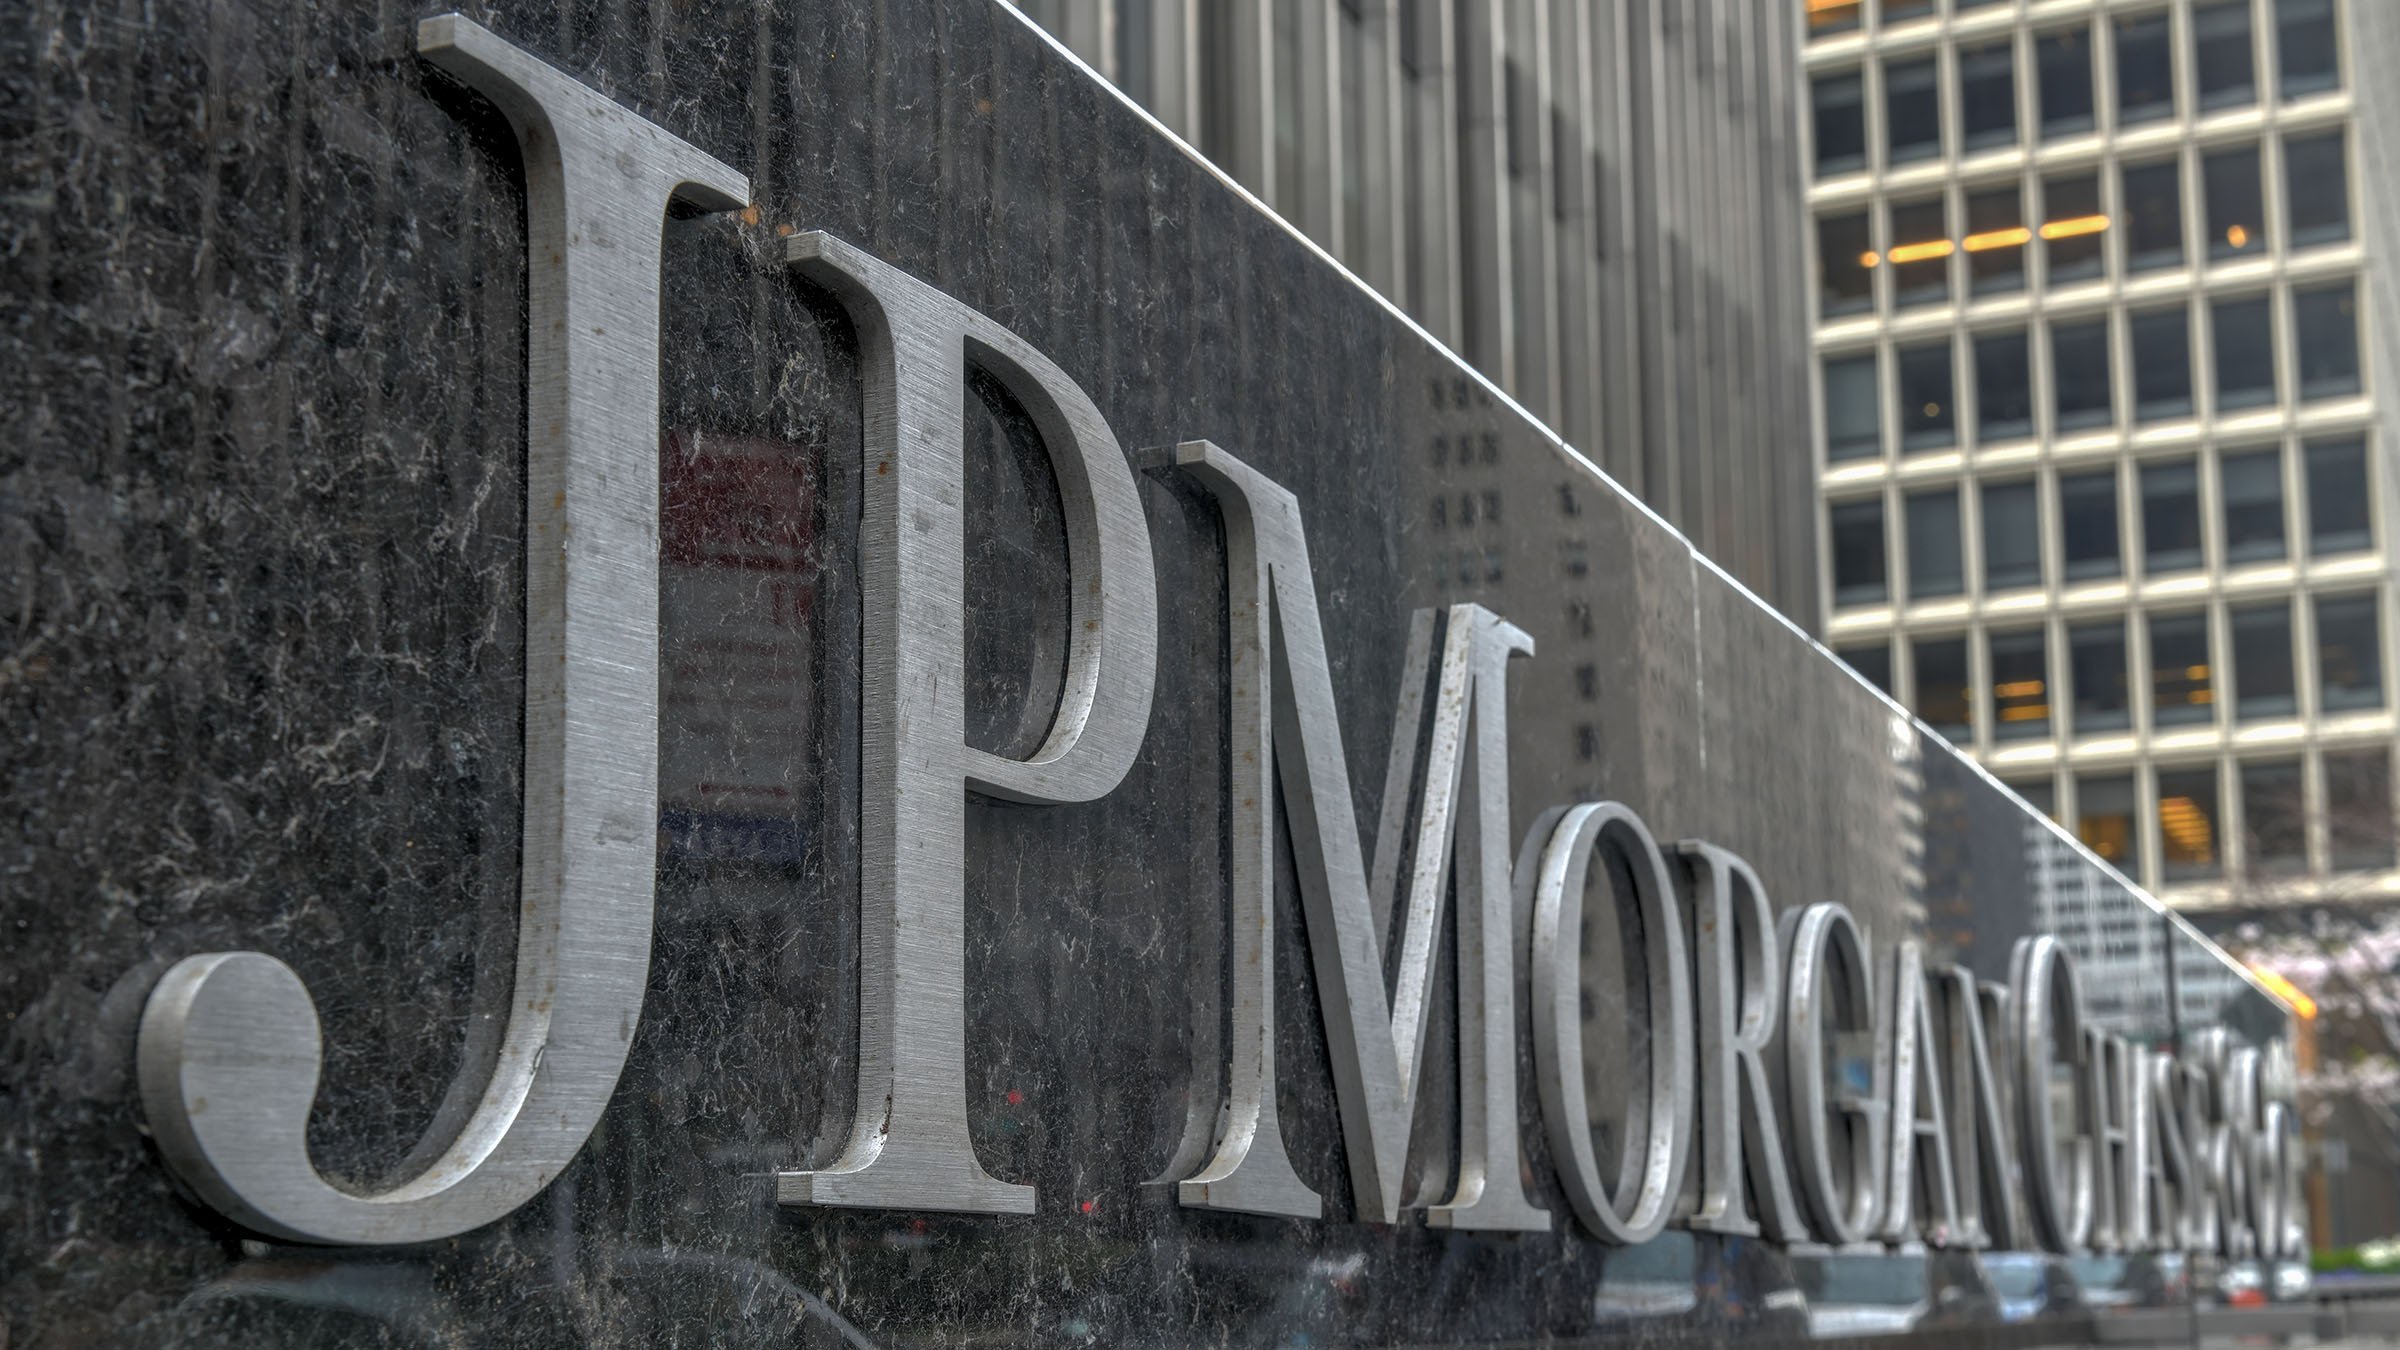 The Price of BTC Won't Rise After Bitcoin Halving, JP Morgan Says